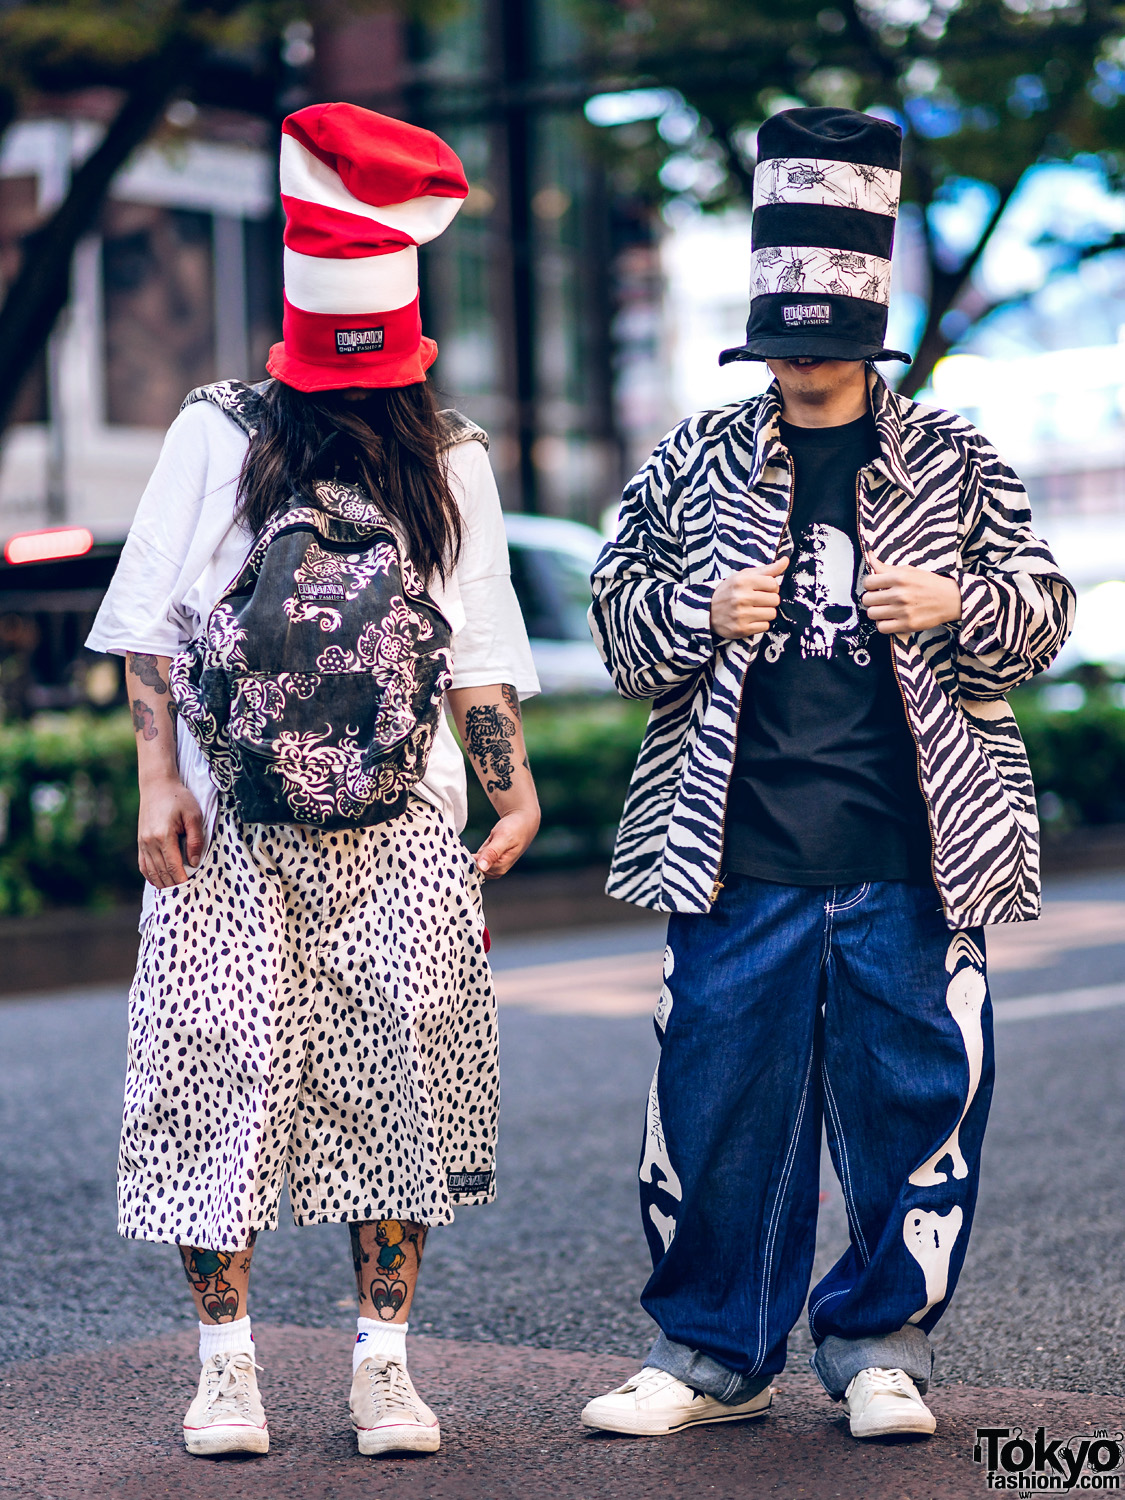 Buttstain Anti Fashion Street Styles in Harajuku w/ Tall Striped Top Hats, Polka Dot Shorts, Zebra Jacket, Dragon Backpack & Converse Sneakers